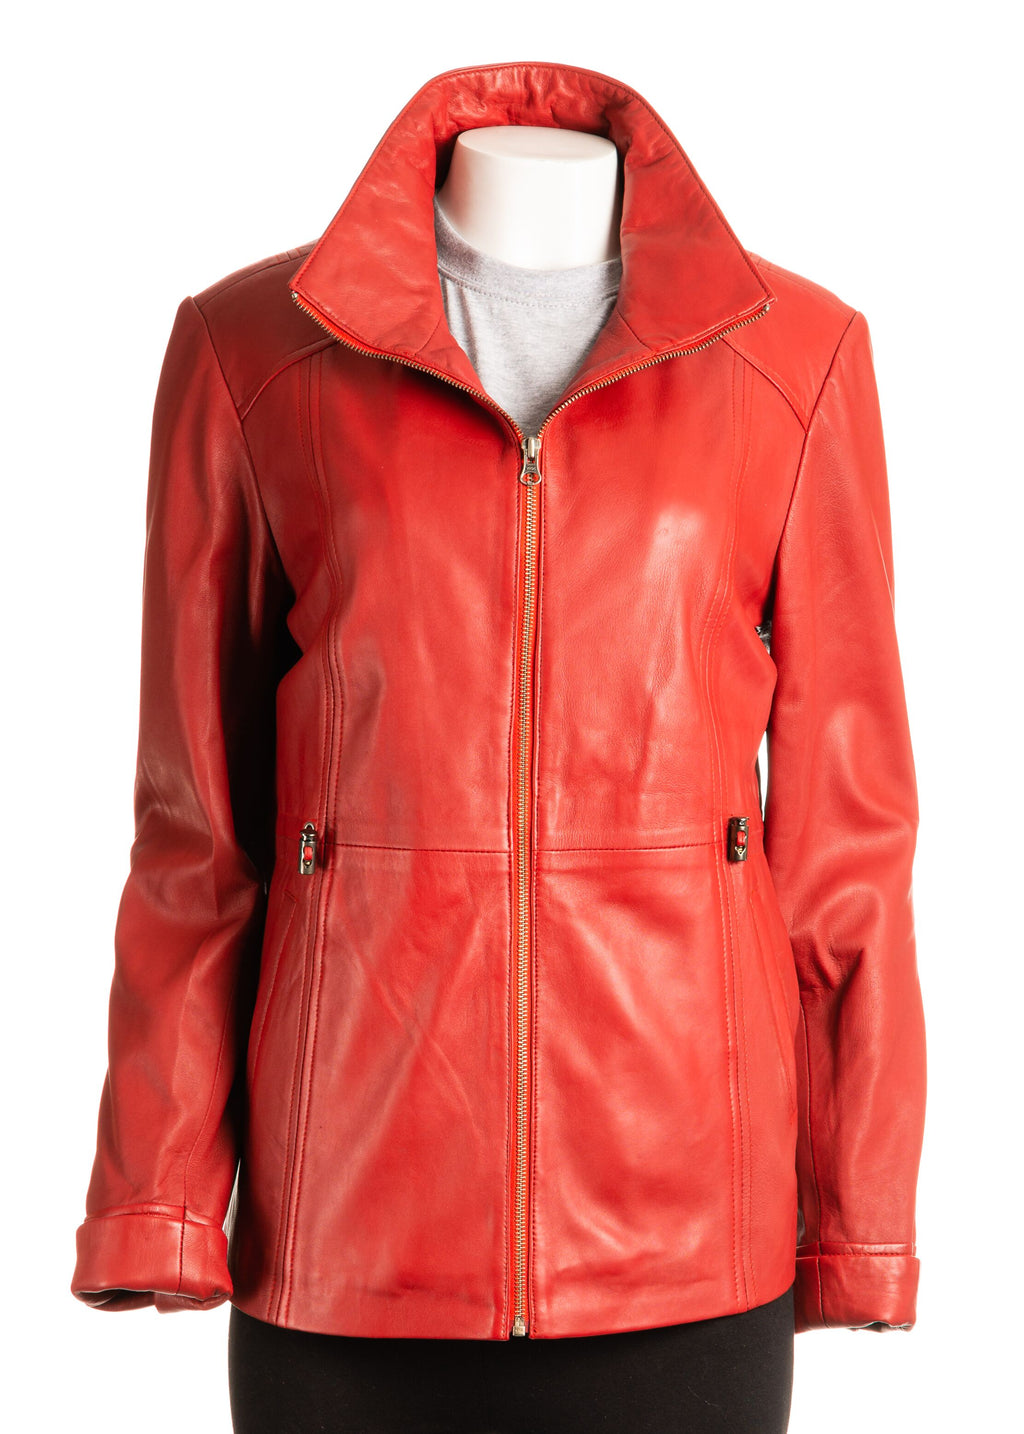 Ladies Plus Size Red Hip Length Toggle Waist Leather Jacket: Berta